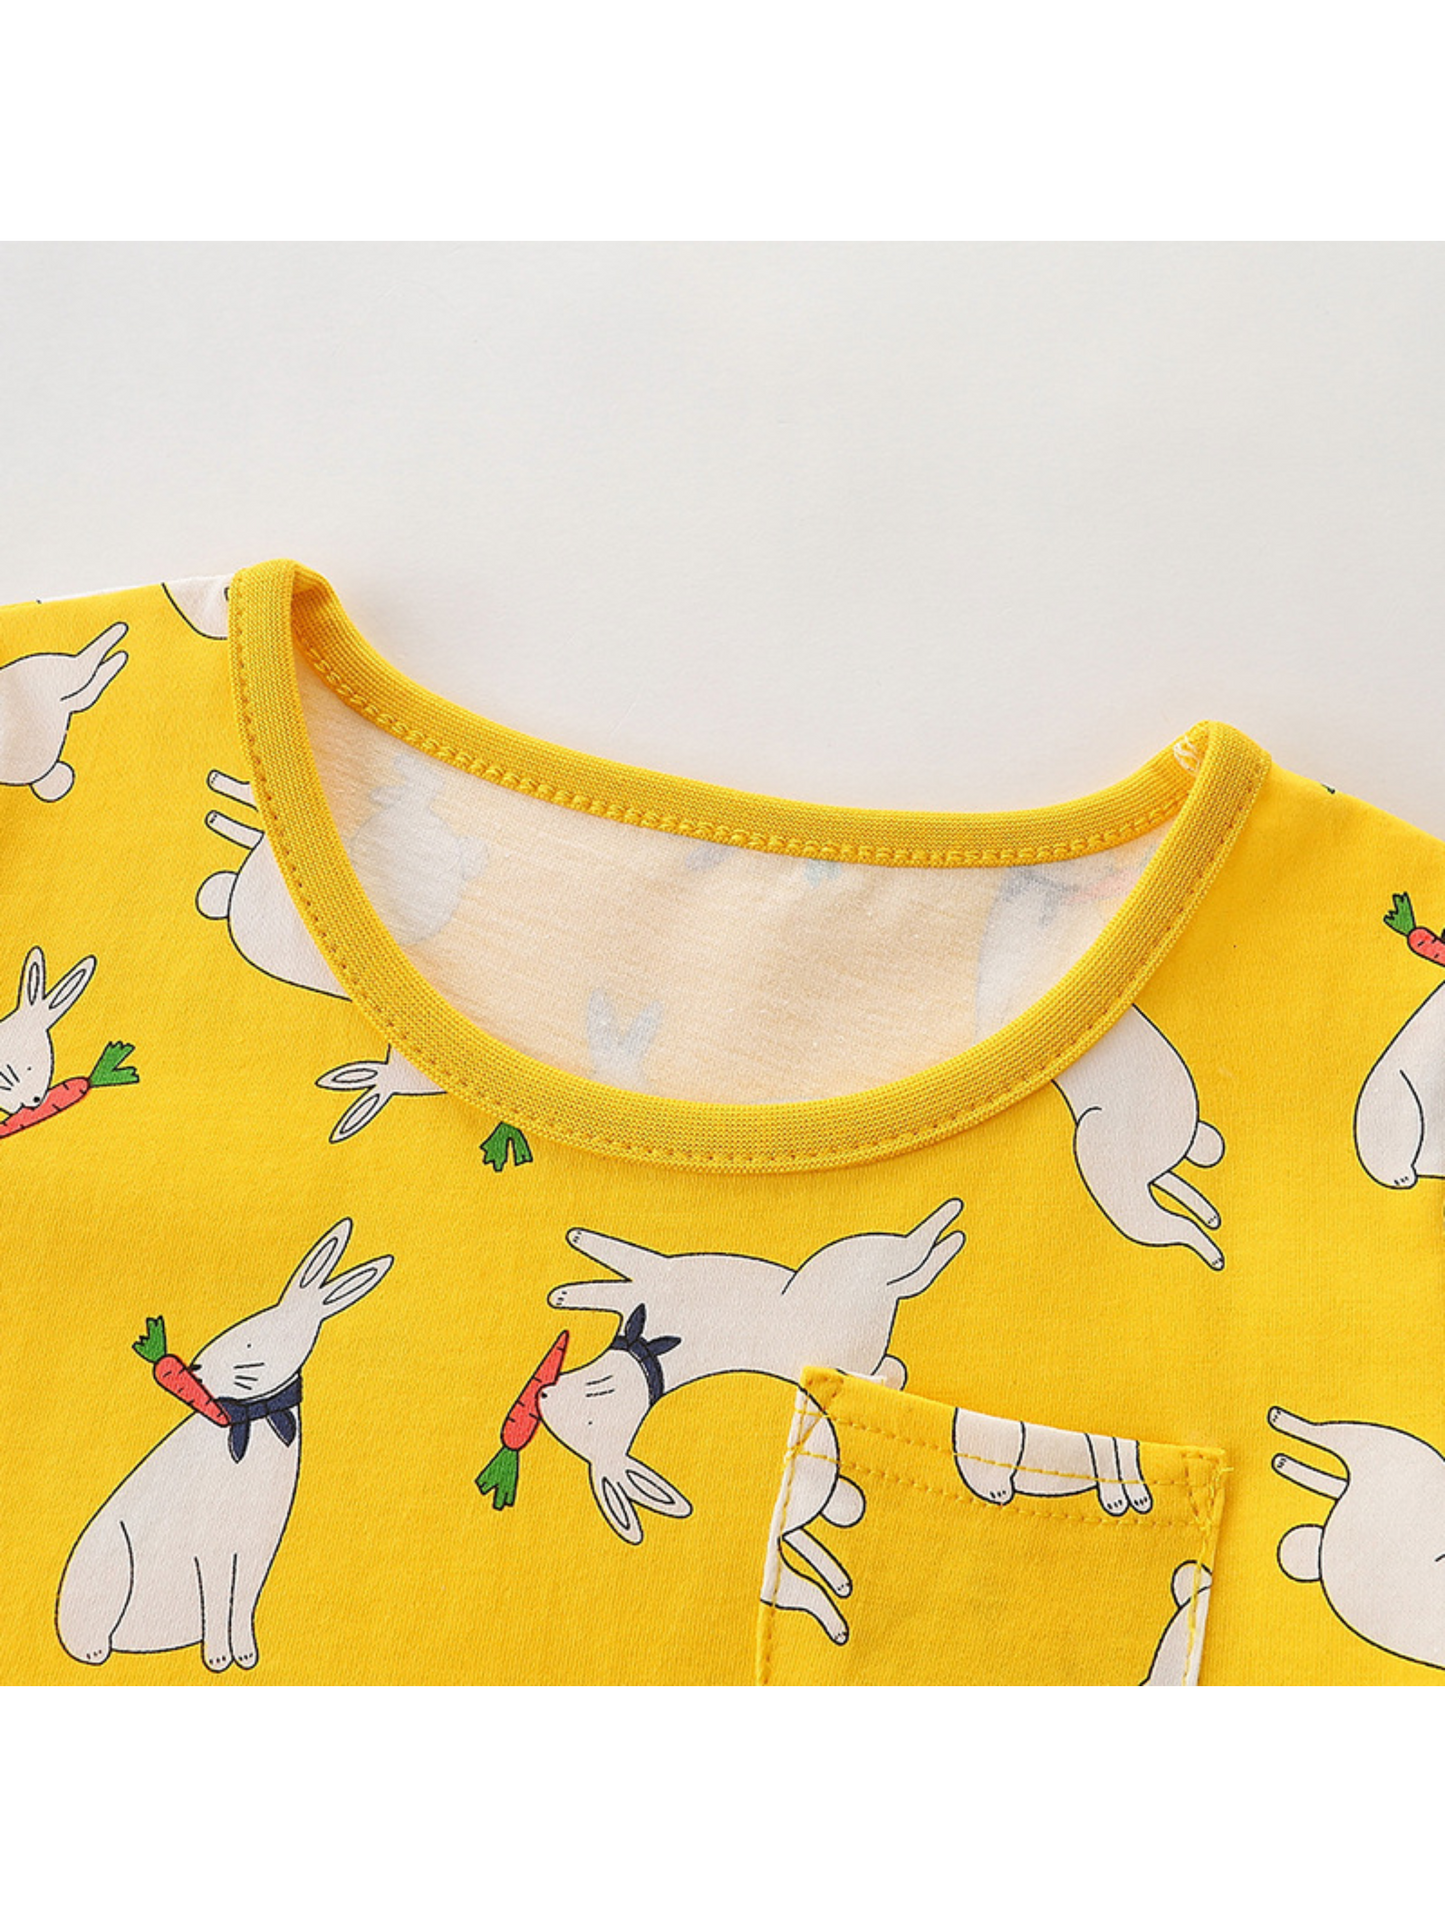 Bunny Yellow Pocket Dress